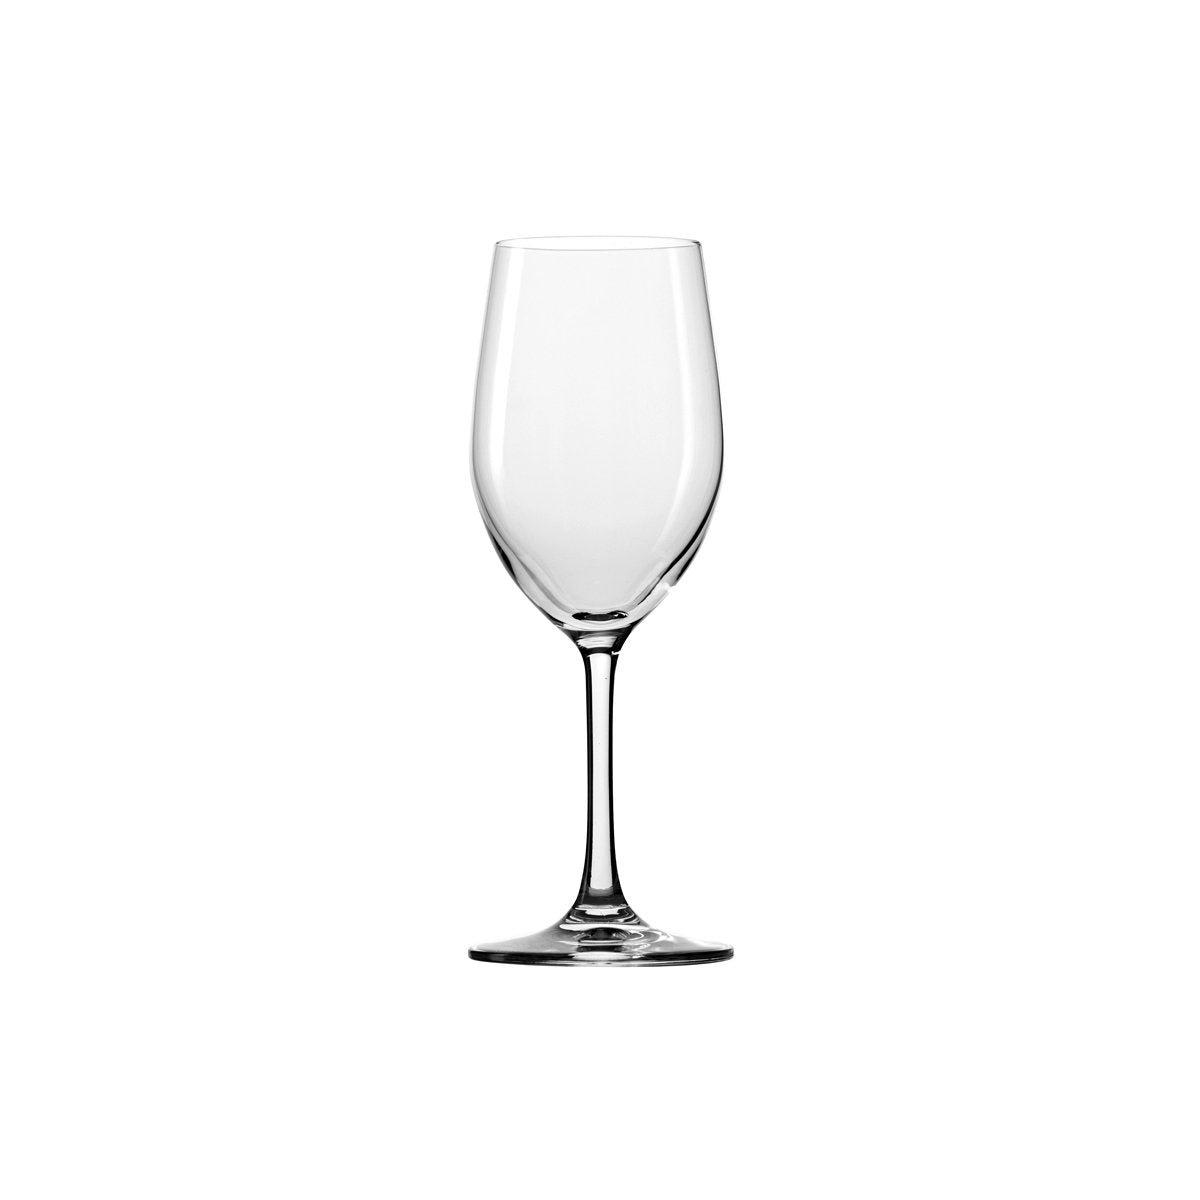 360-037 Stolzle Classic White Wine 305ml  Tomkin Australia Hospitality Supplies